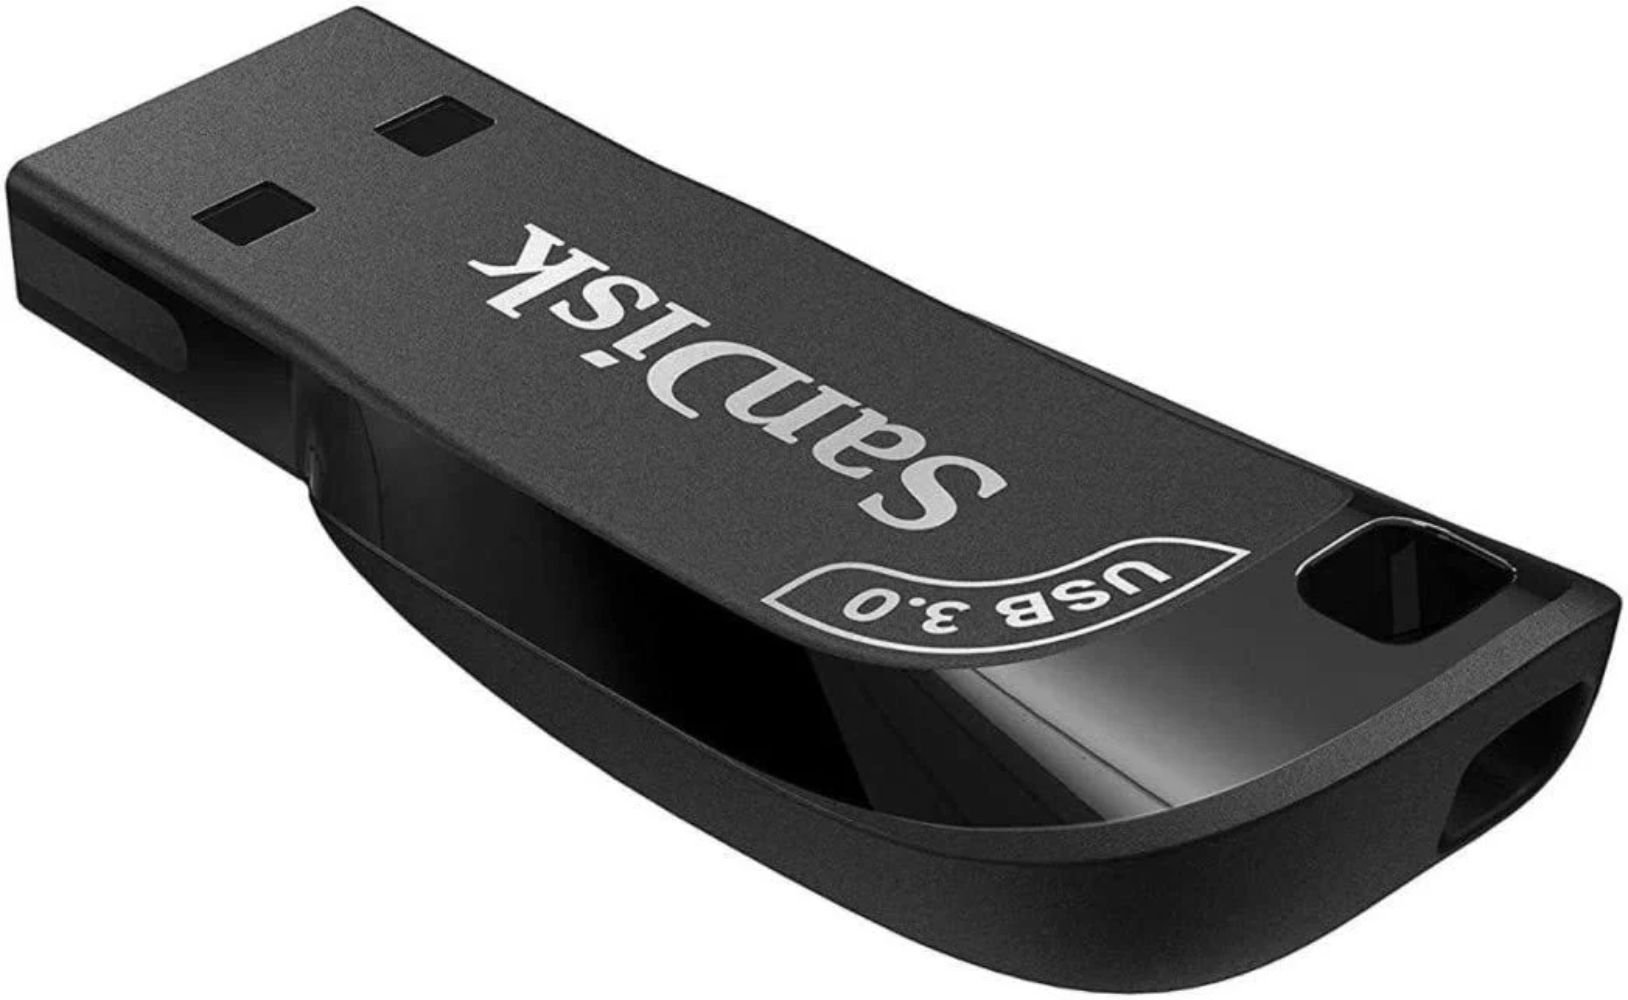 Sandisk Ultra Shift 512GB USB 3.0 Flash Bellek SDCZ410-512G-G46